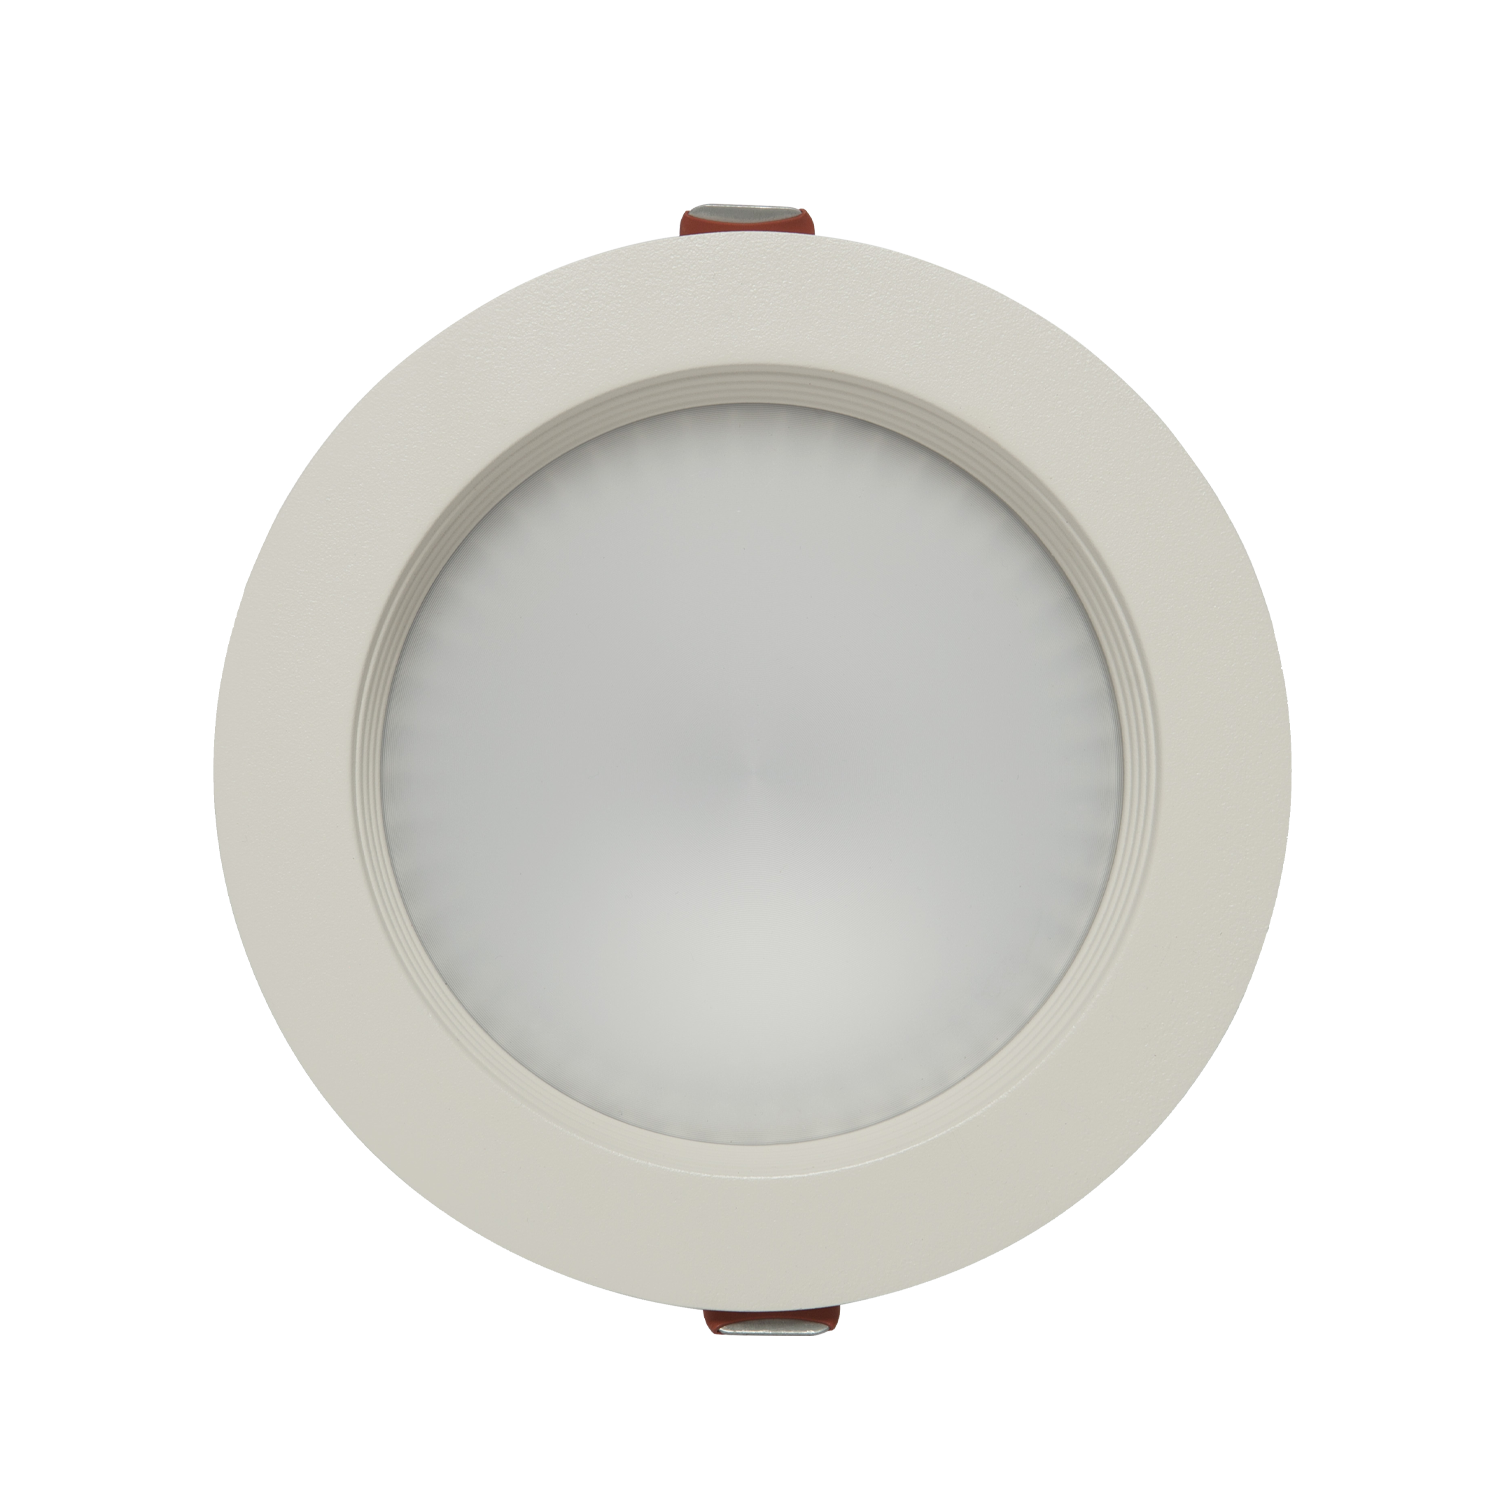 Luminaria LED de empotrar en techo blanco 10 W 100-277 V~ 4 000 K, TL-4440.B40